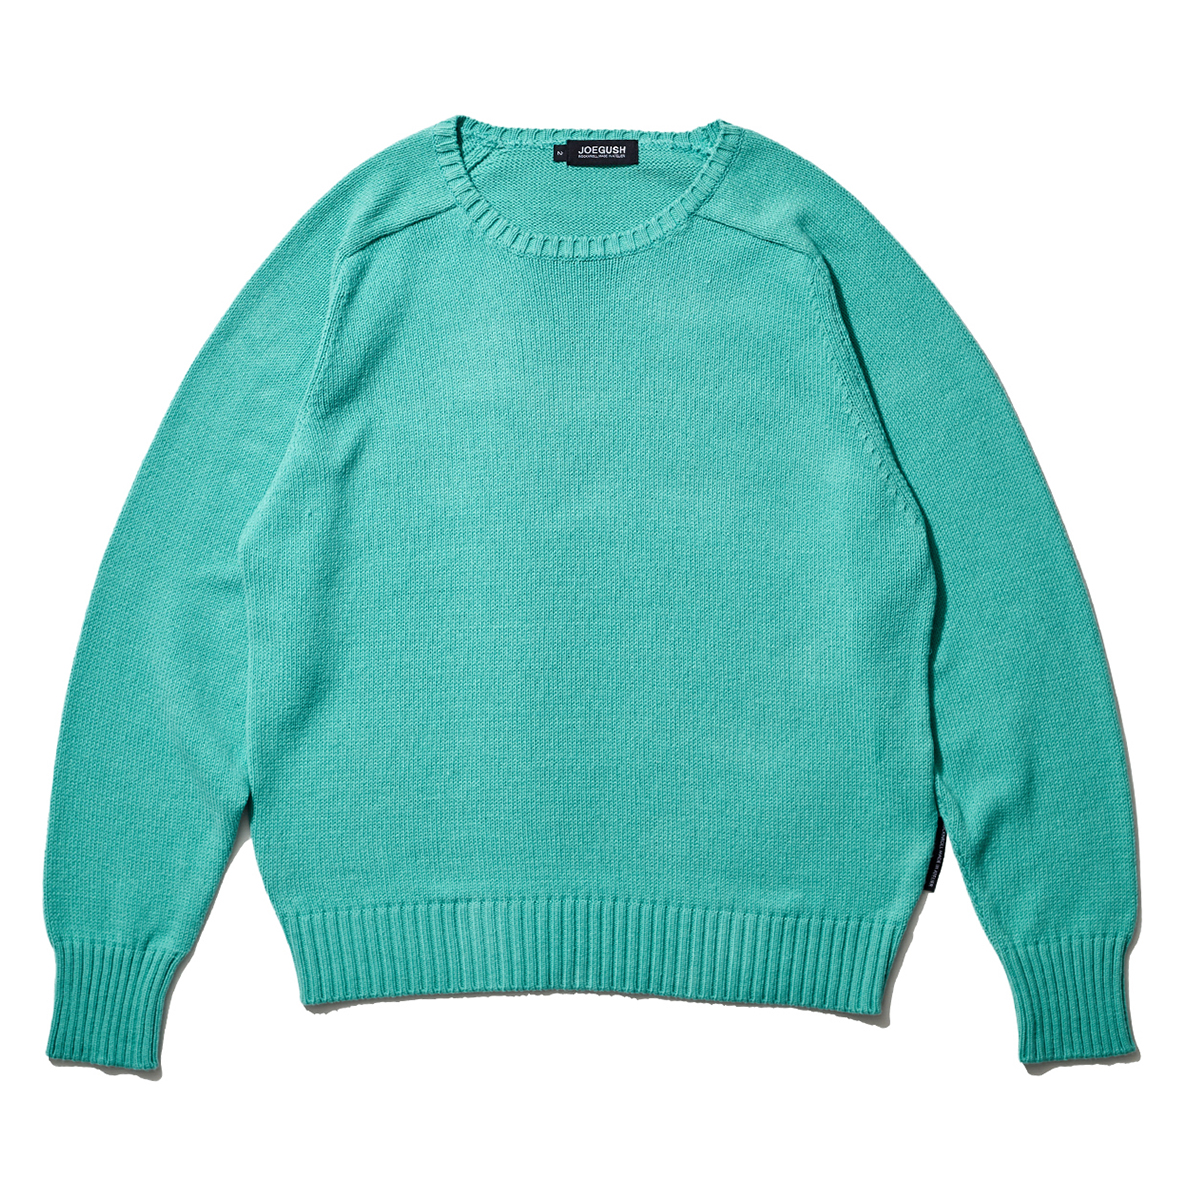 Single pullover knit Lv.1 (Mint)